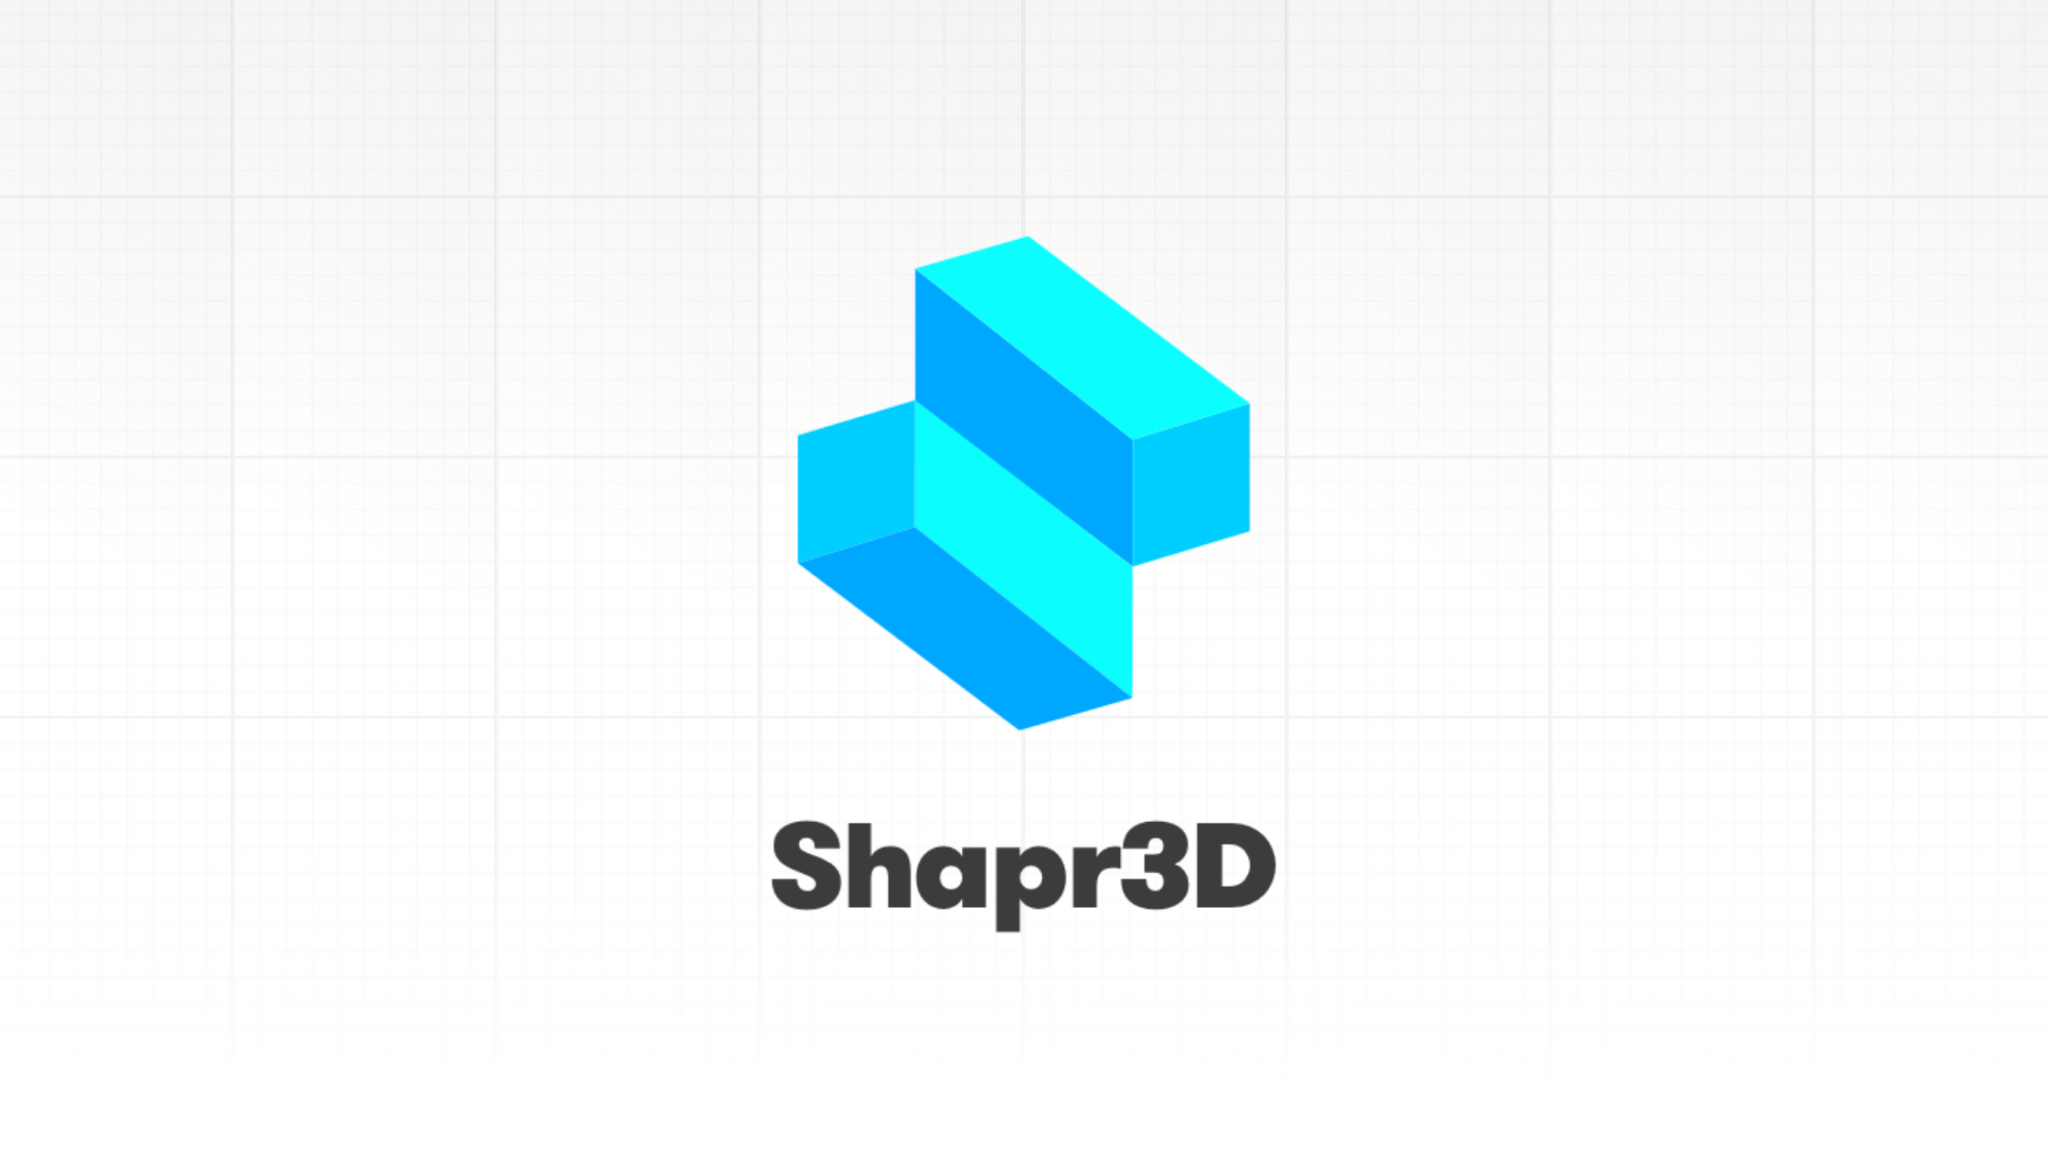 3MF in the Wild – Meet Shapr3D